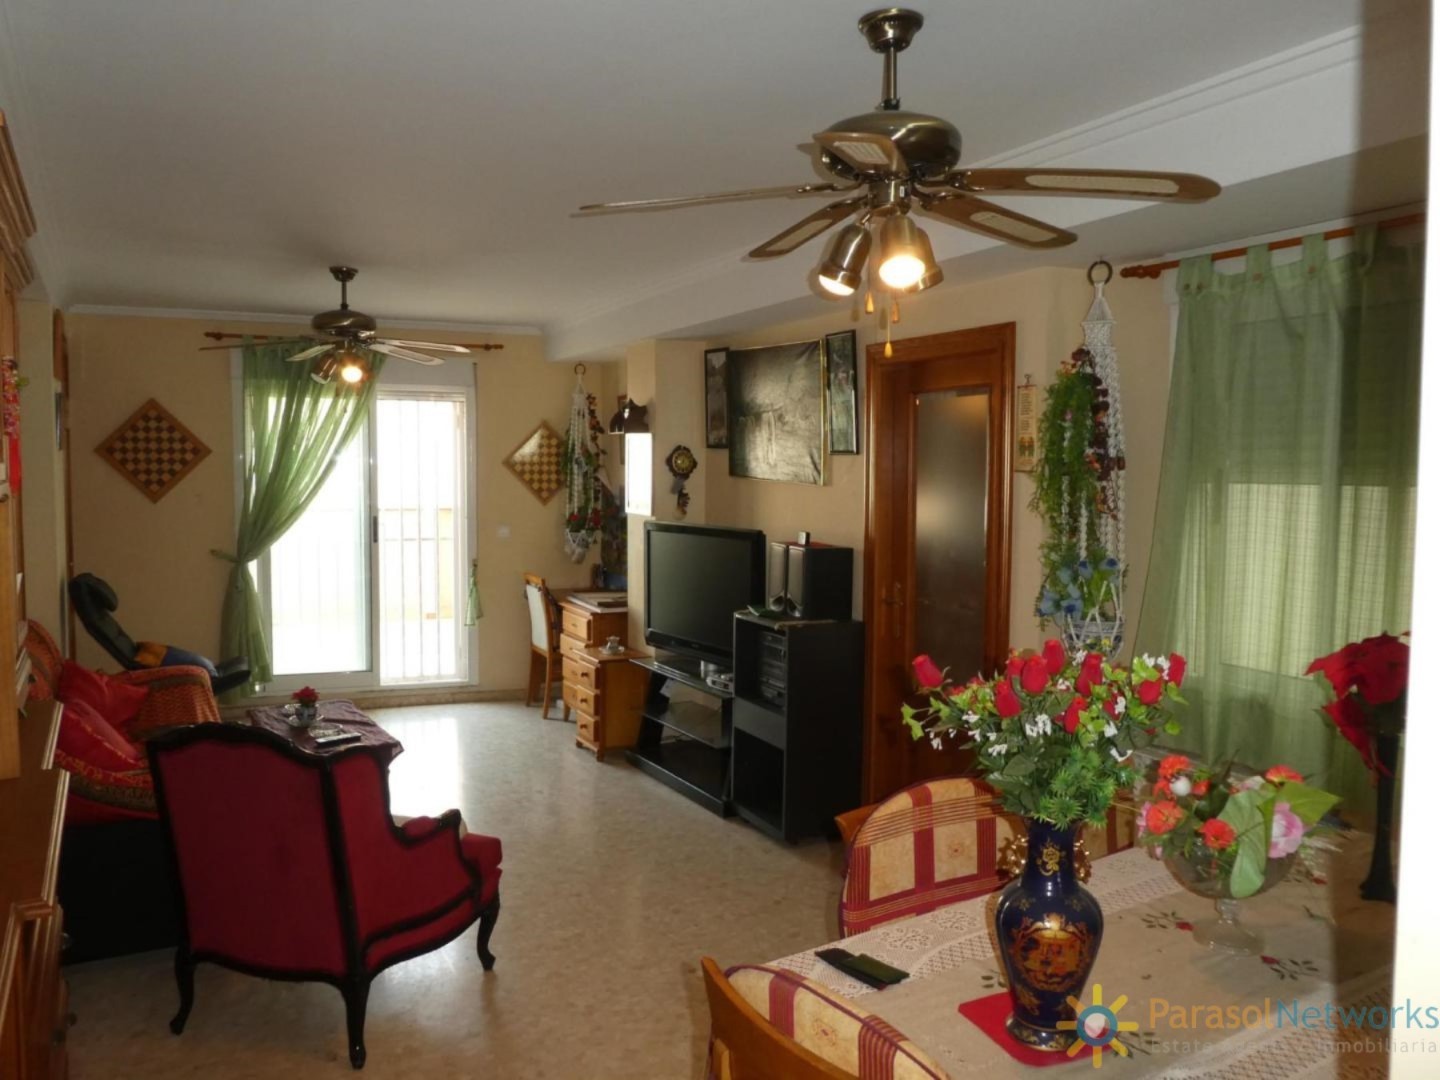 Apartment for sale in Oliva- Ref: 818